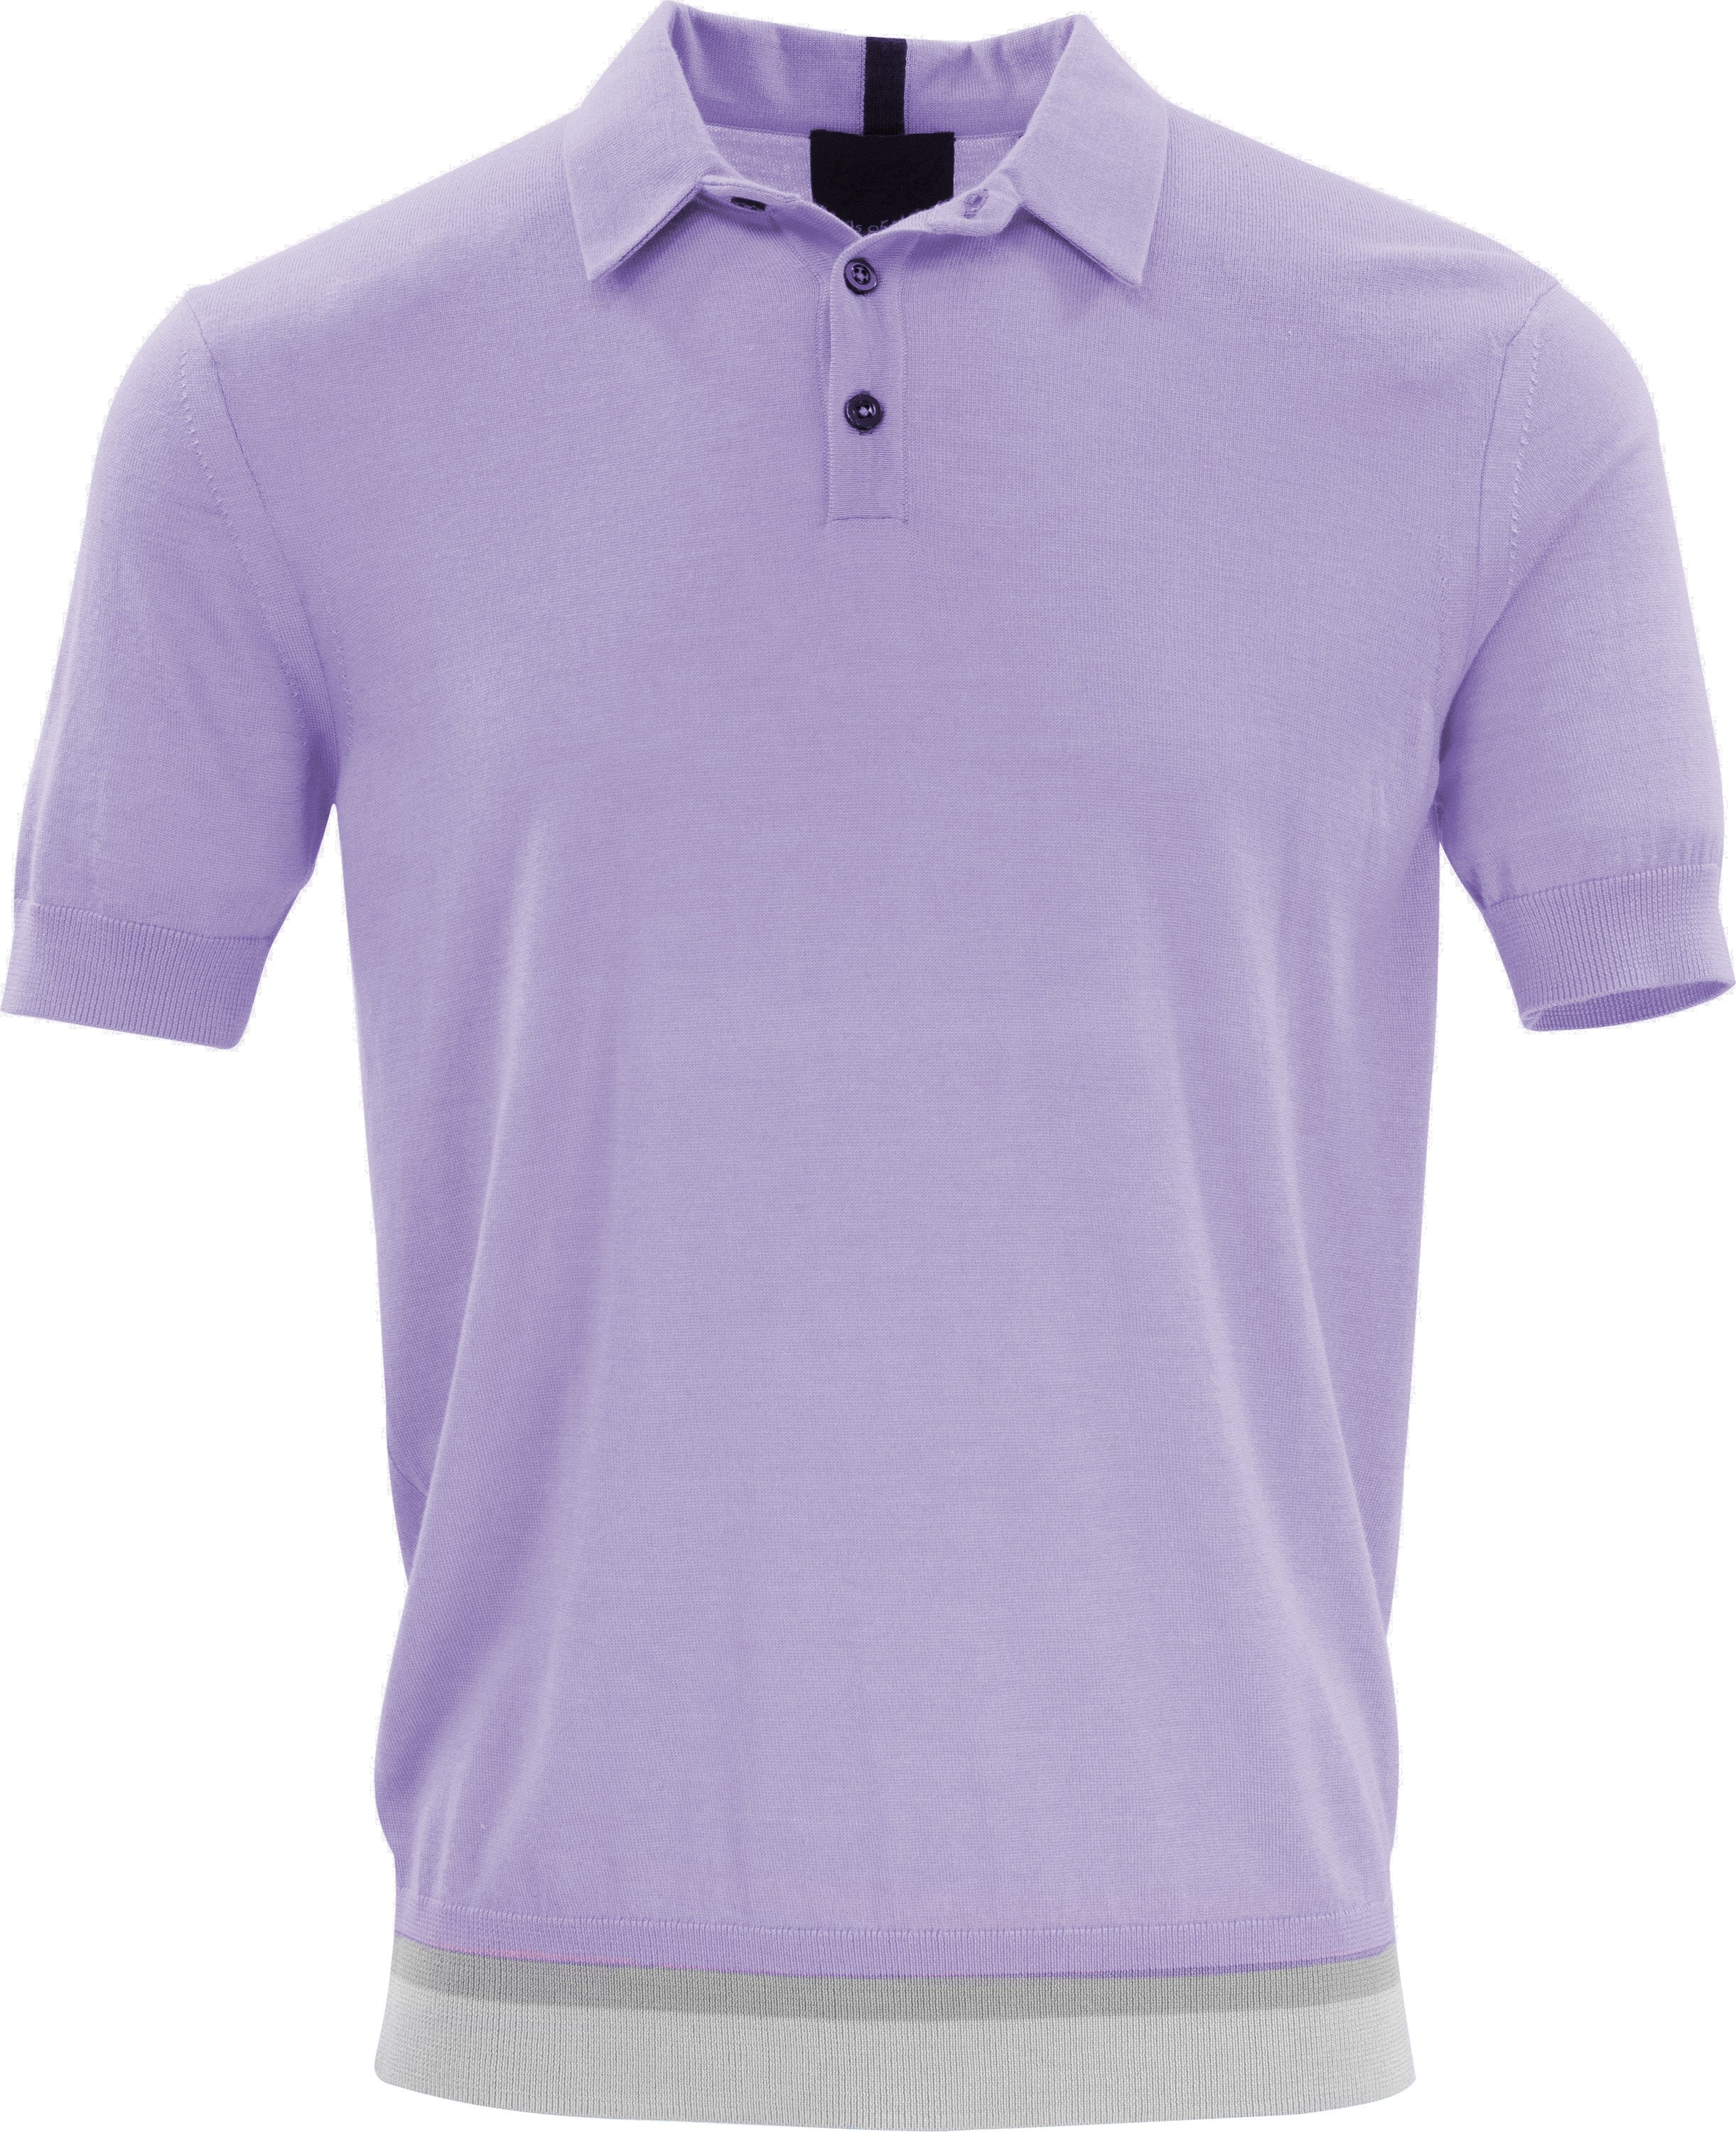 Men’s Pink / Purple Pilgrim Polo Shirt - Lavender Large Lords of Harlech